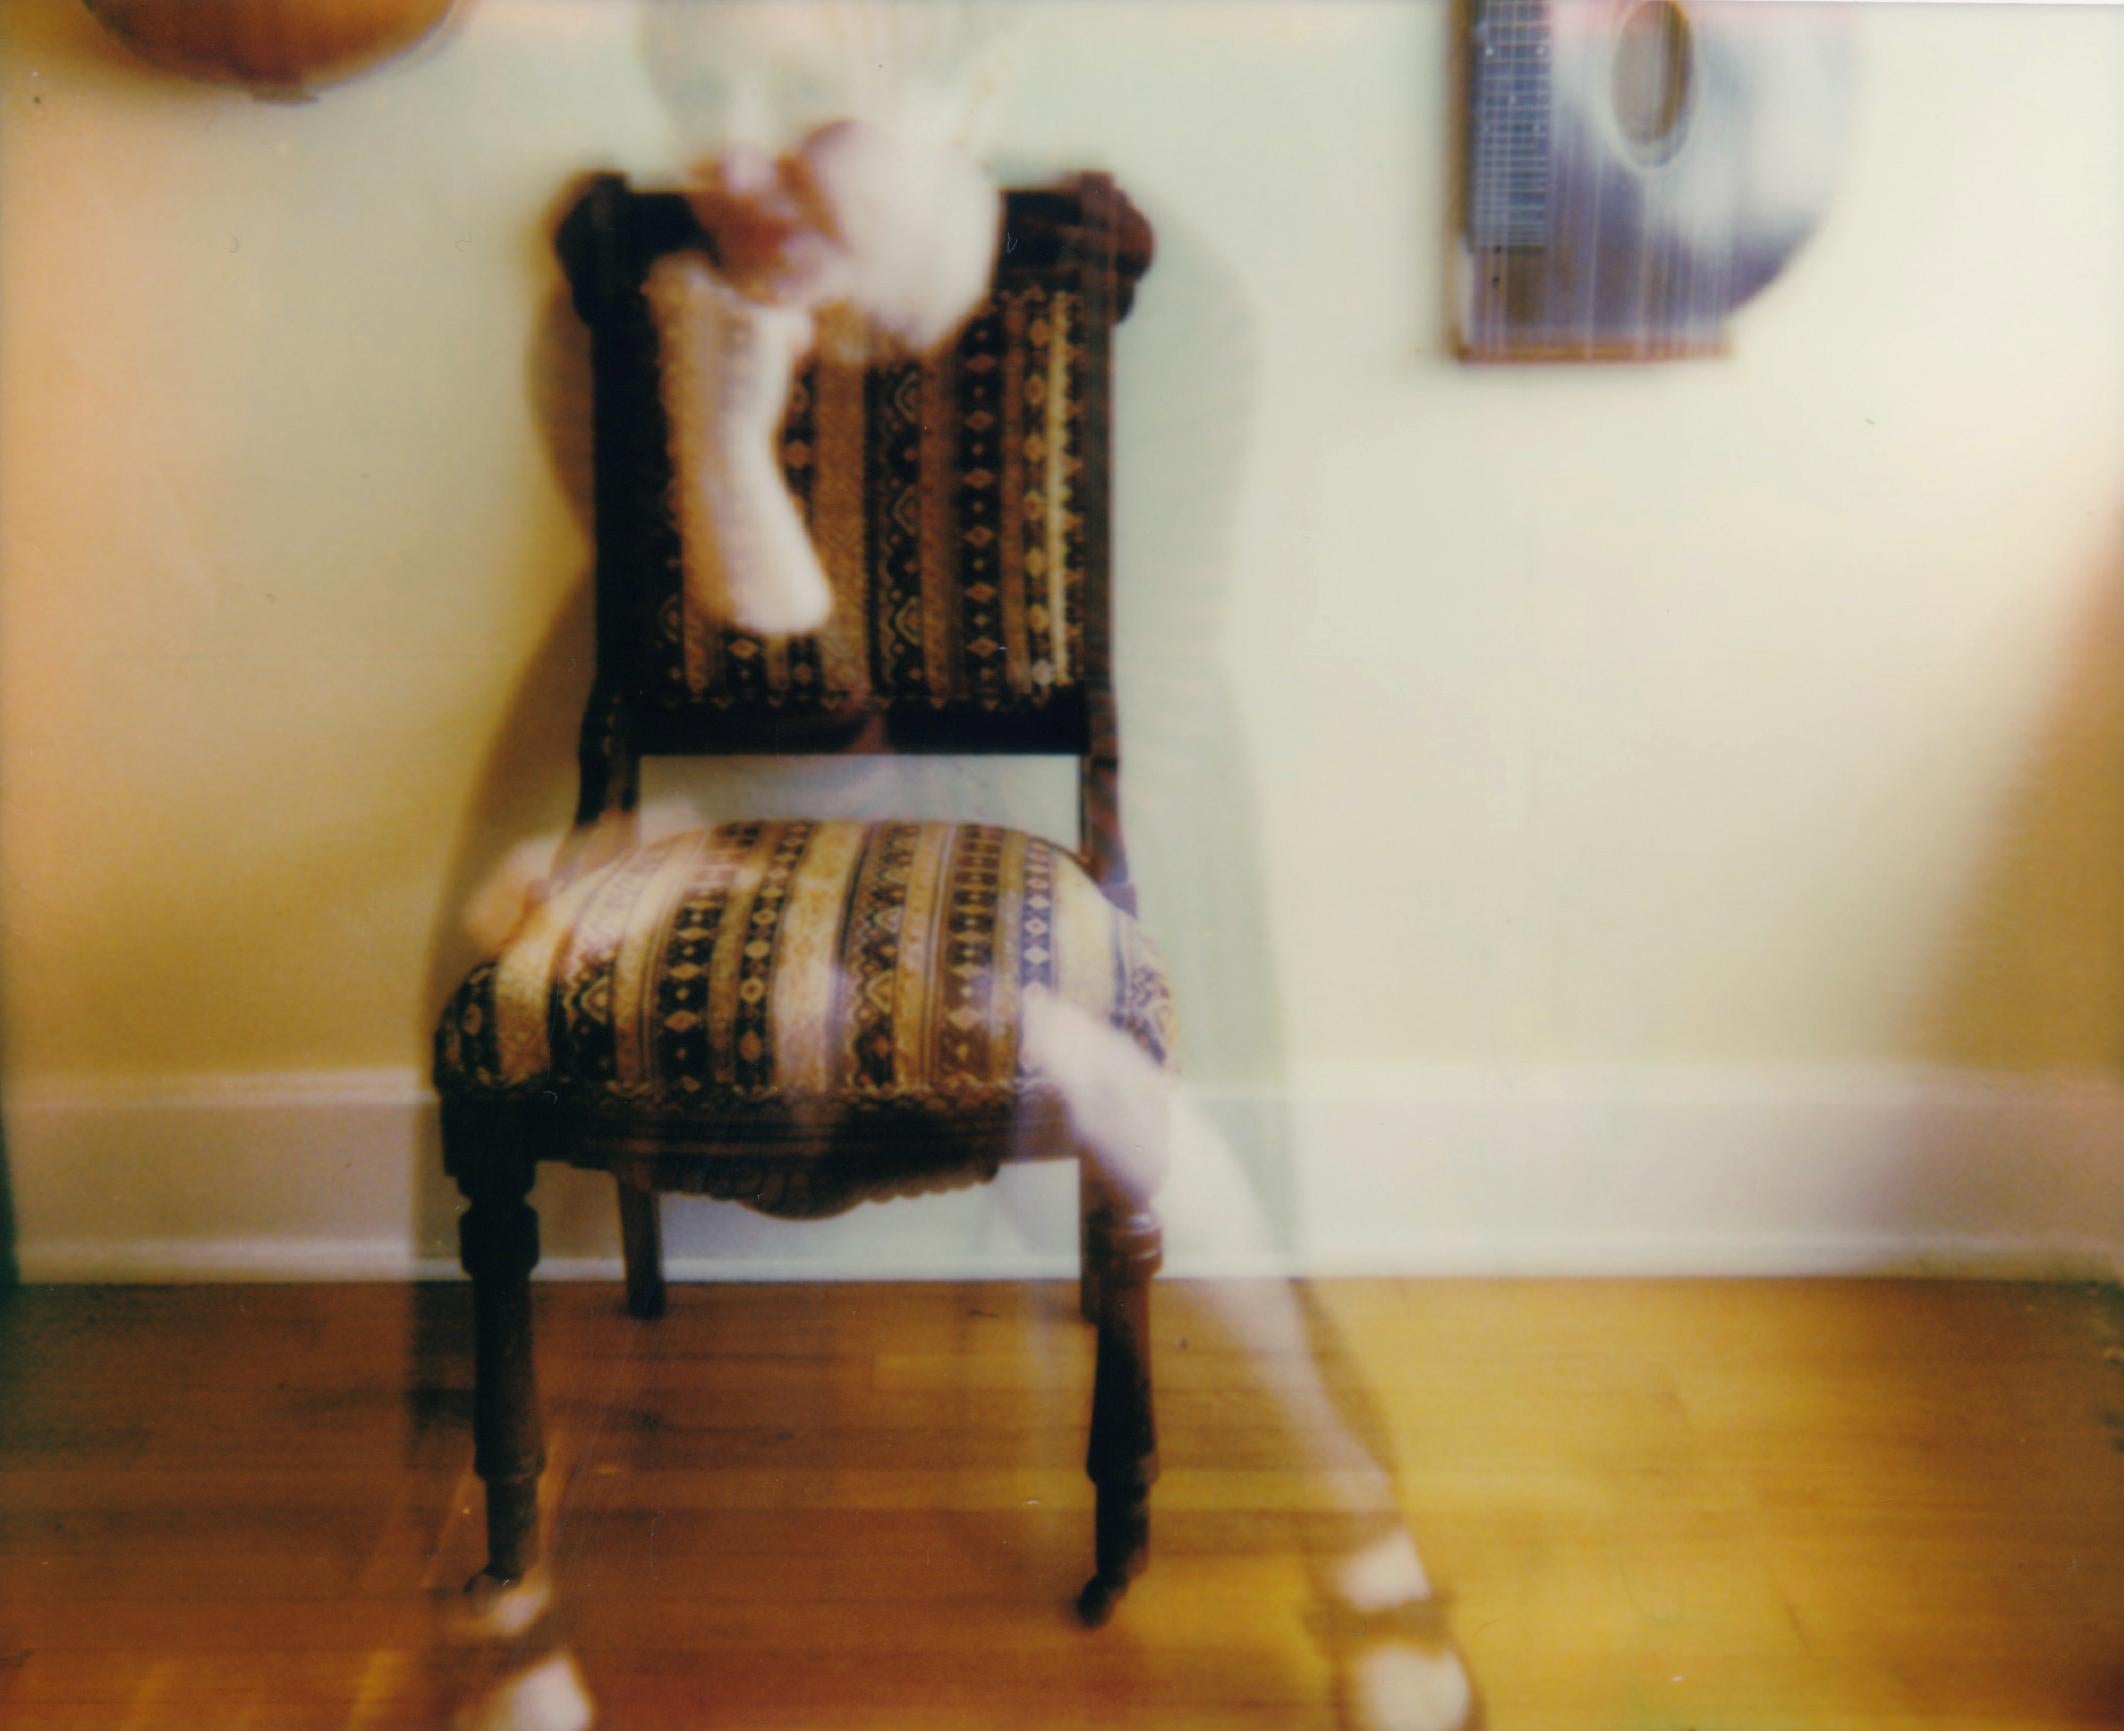 Coming into Focus - Contemporain, Femme, Polaroid, Photographie, XXIe siècle